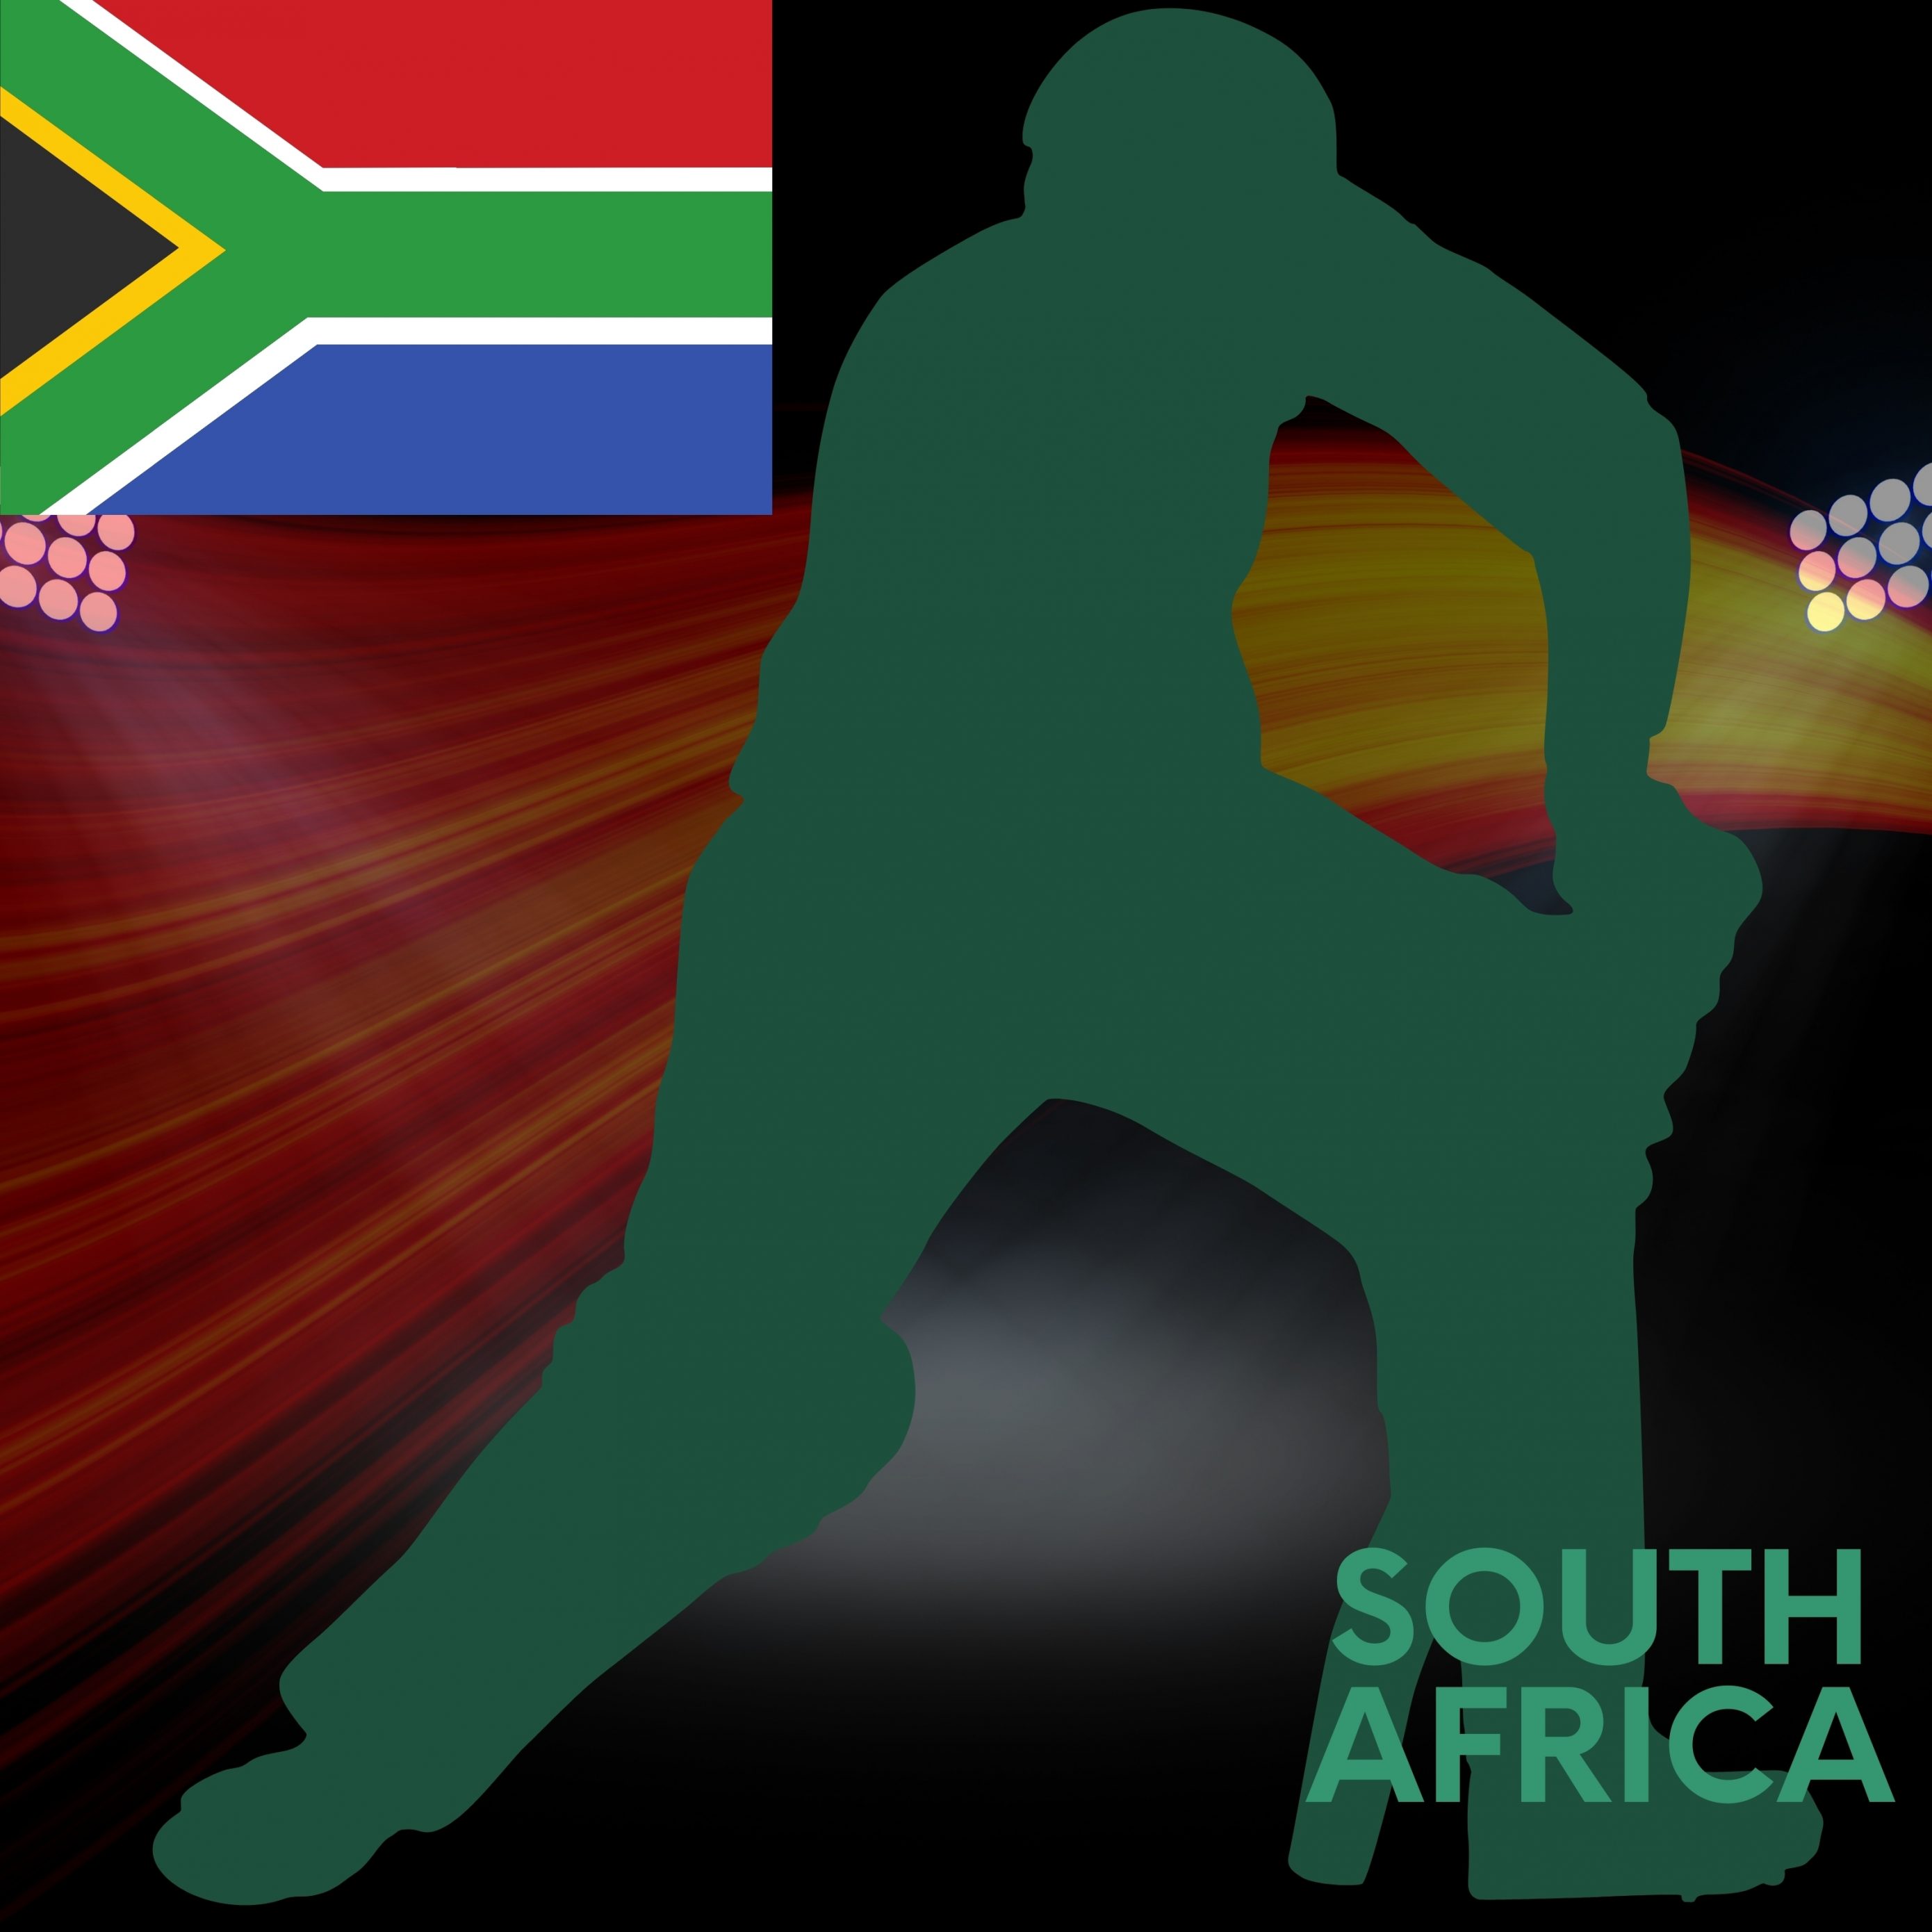 2780x2780 Parallax wallpaper 4k South Africa Cricket Stadium iPad Wallpaper 2780x2780 pixels resolution